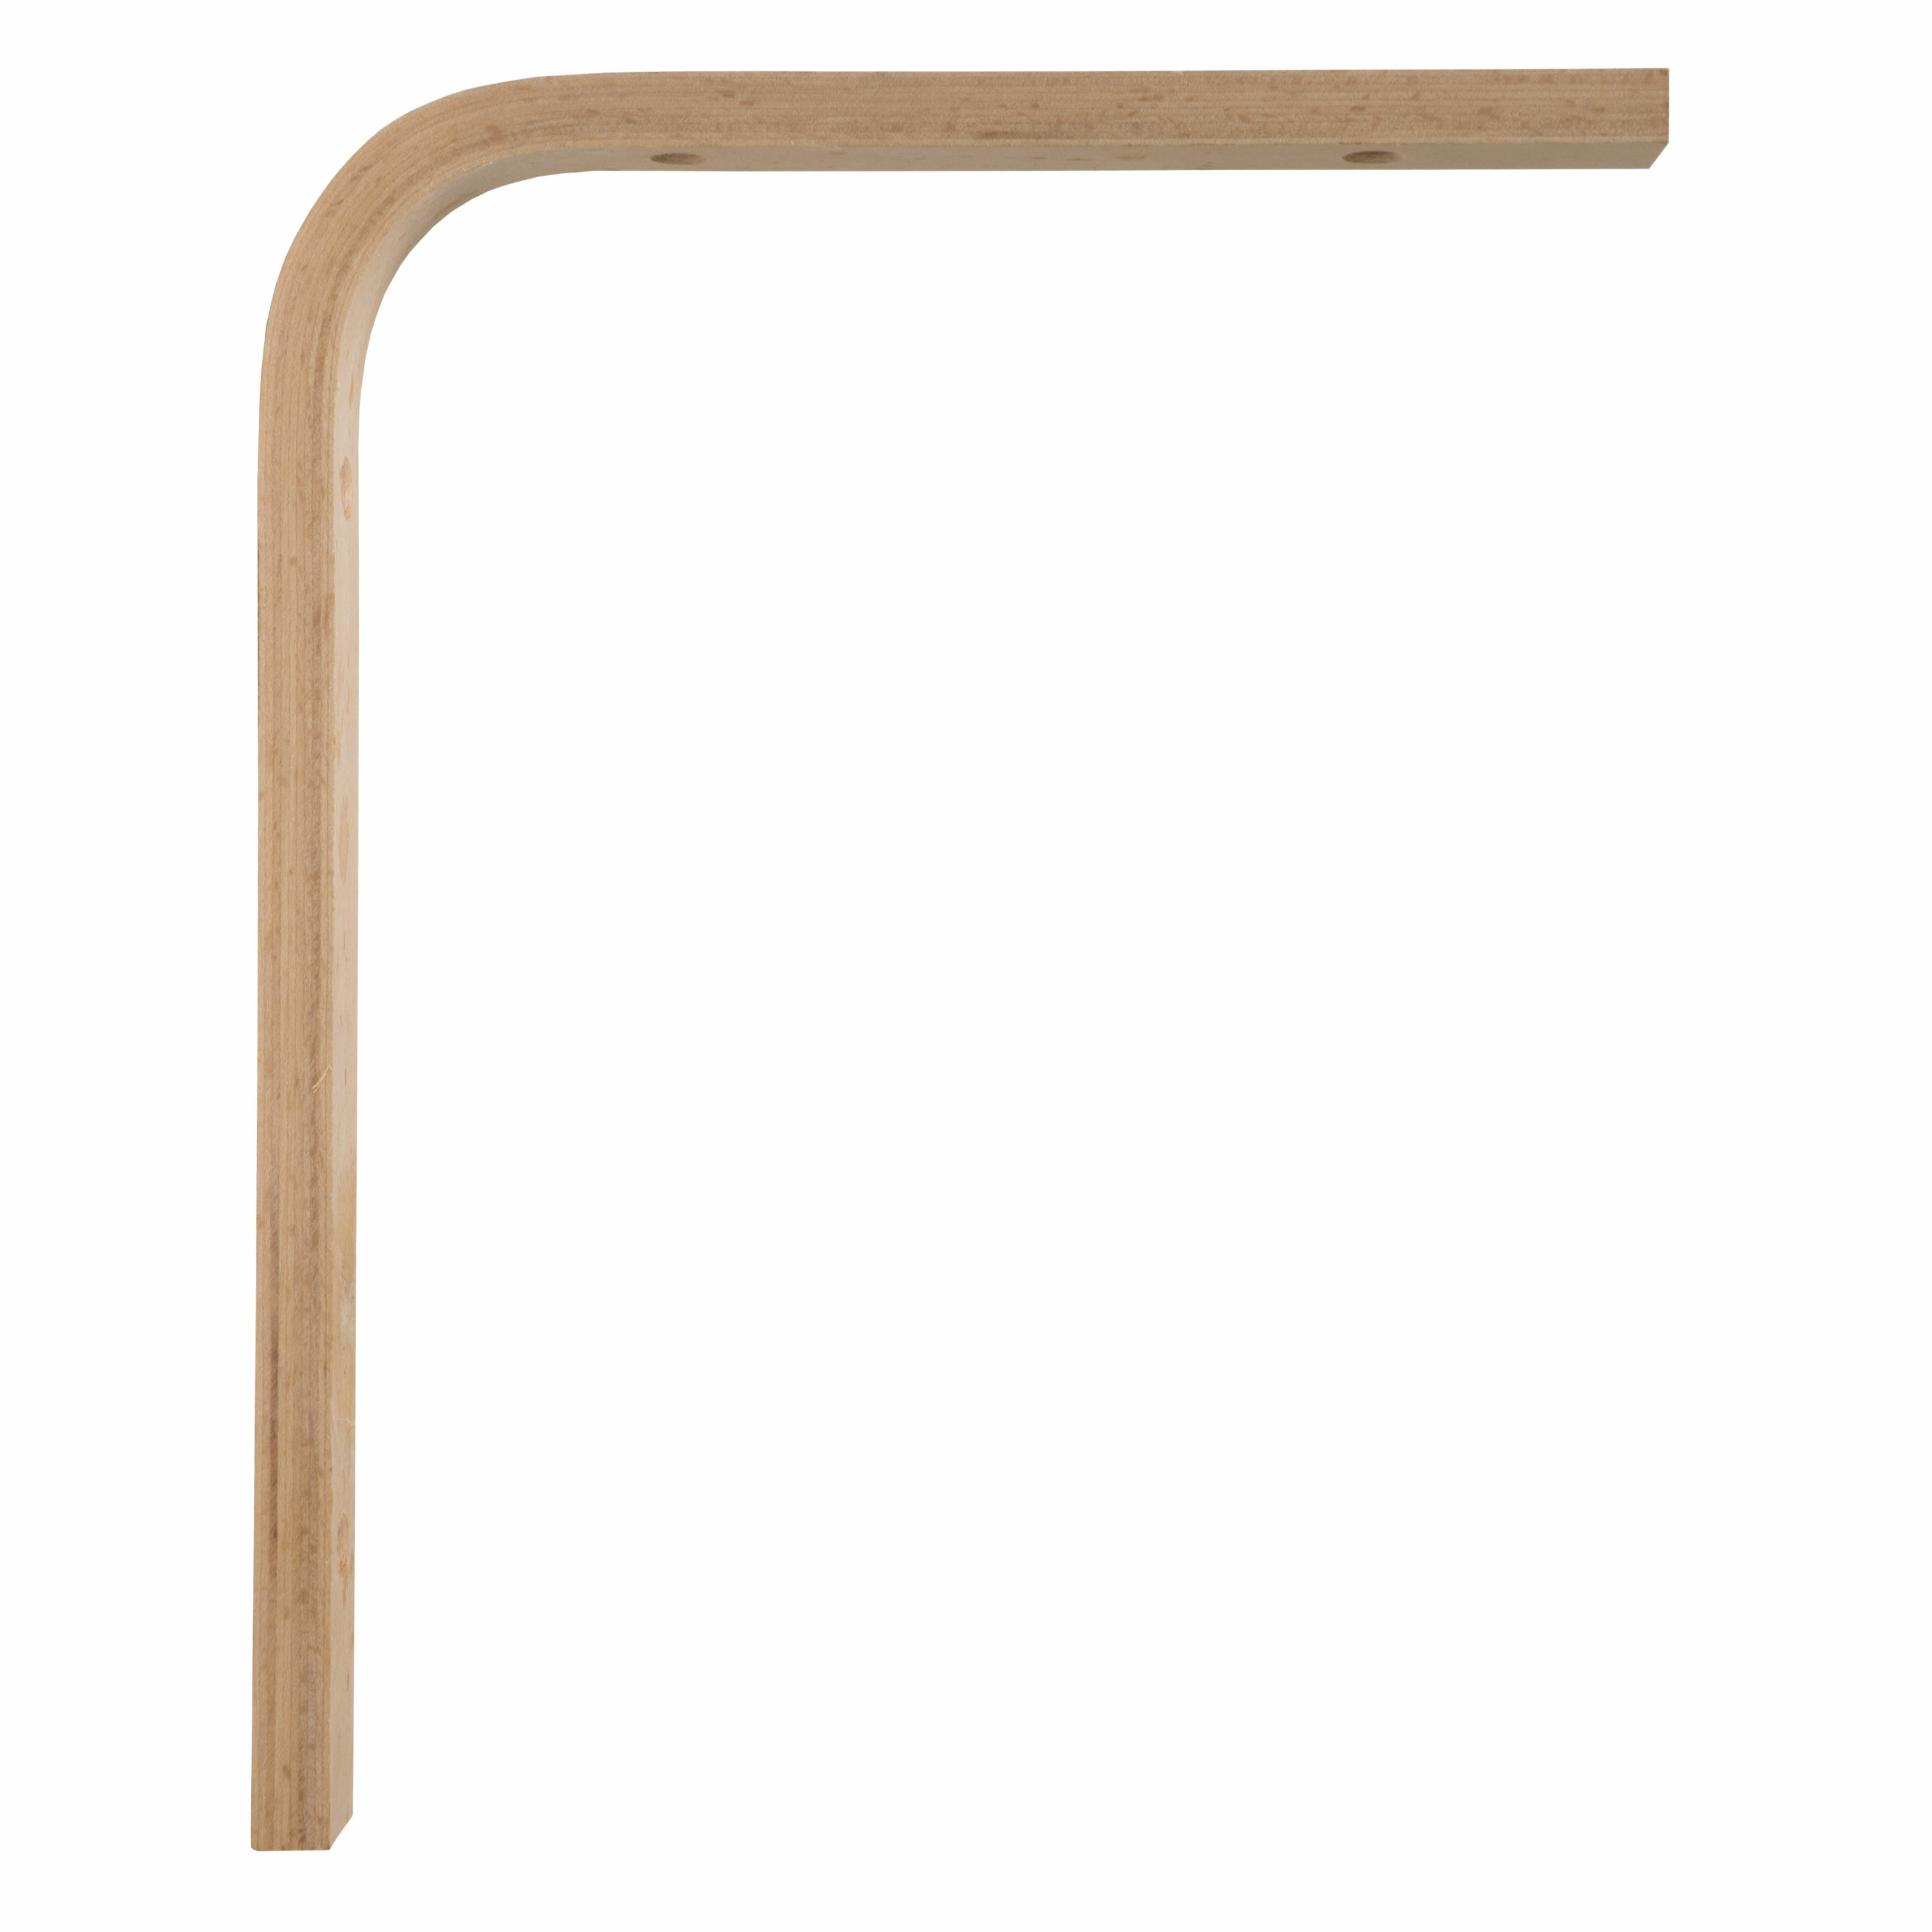 AMIG Plankdrager/planksteun van hout - lichtbruin - H200 x B150 mm -